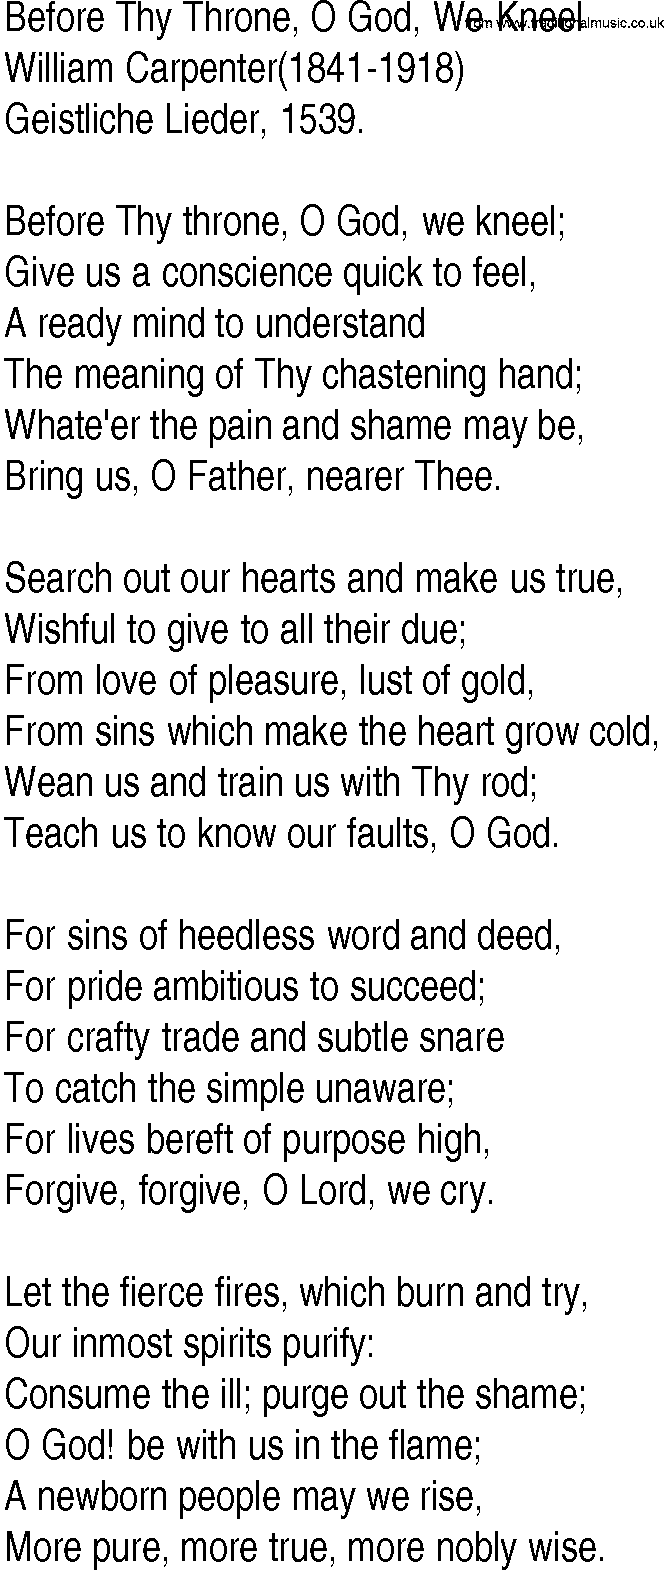 Hymn and Gospel Song: Before Thy Throne, O God, We Kneel by William Carpenter lyrics